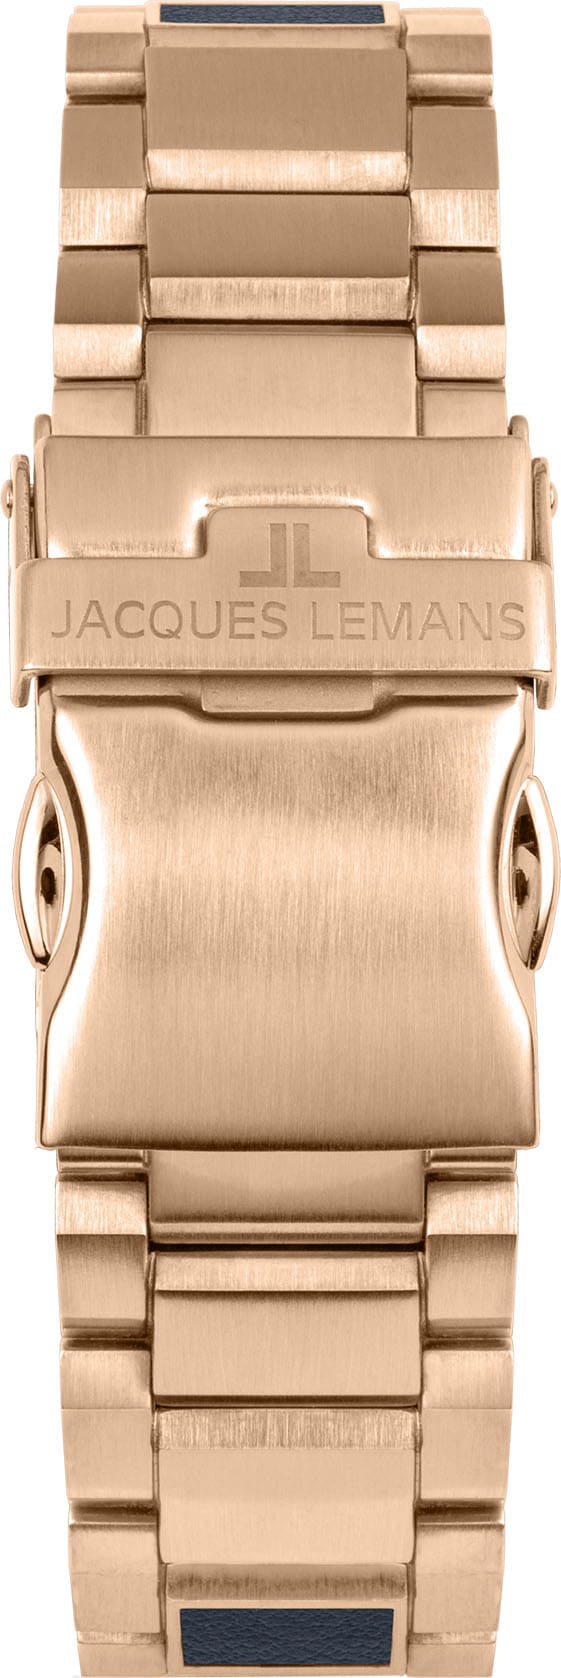 Jacques Lemans Solaruhr »Eco kaufen Rechnung 1-2116F« Power, auf